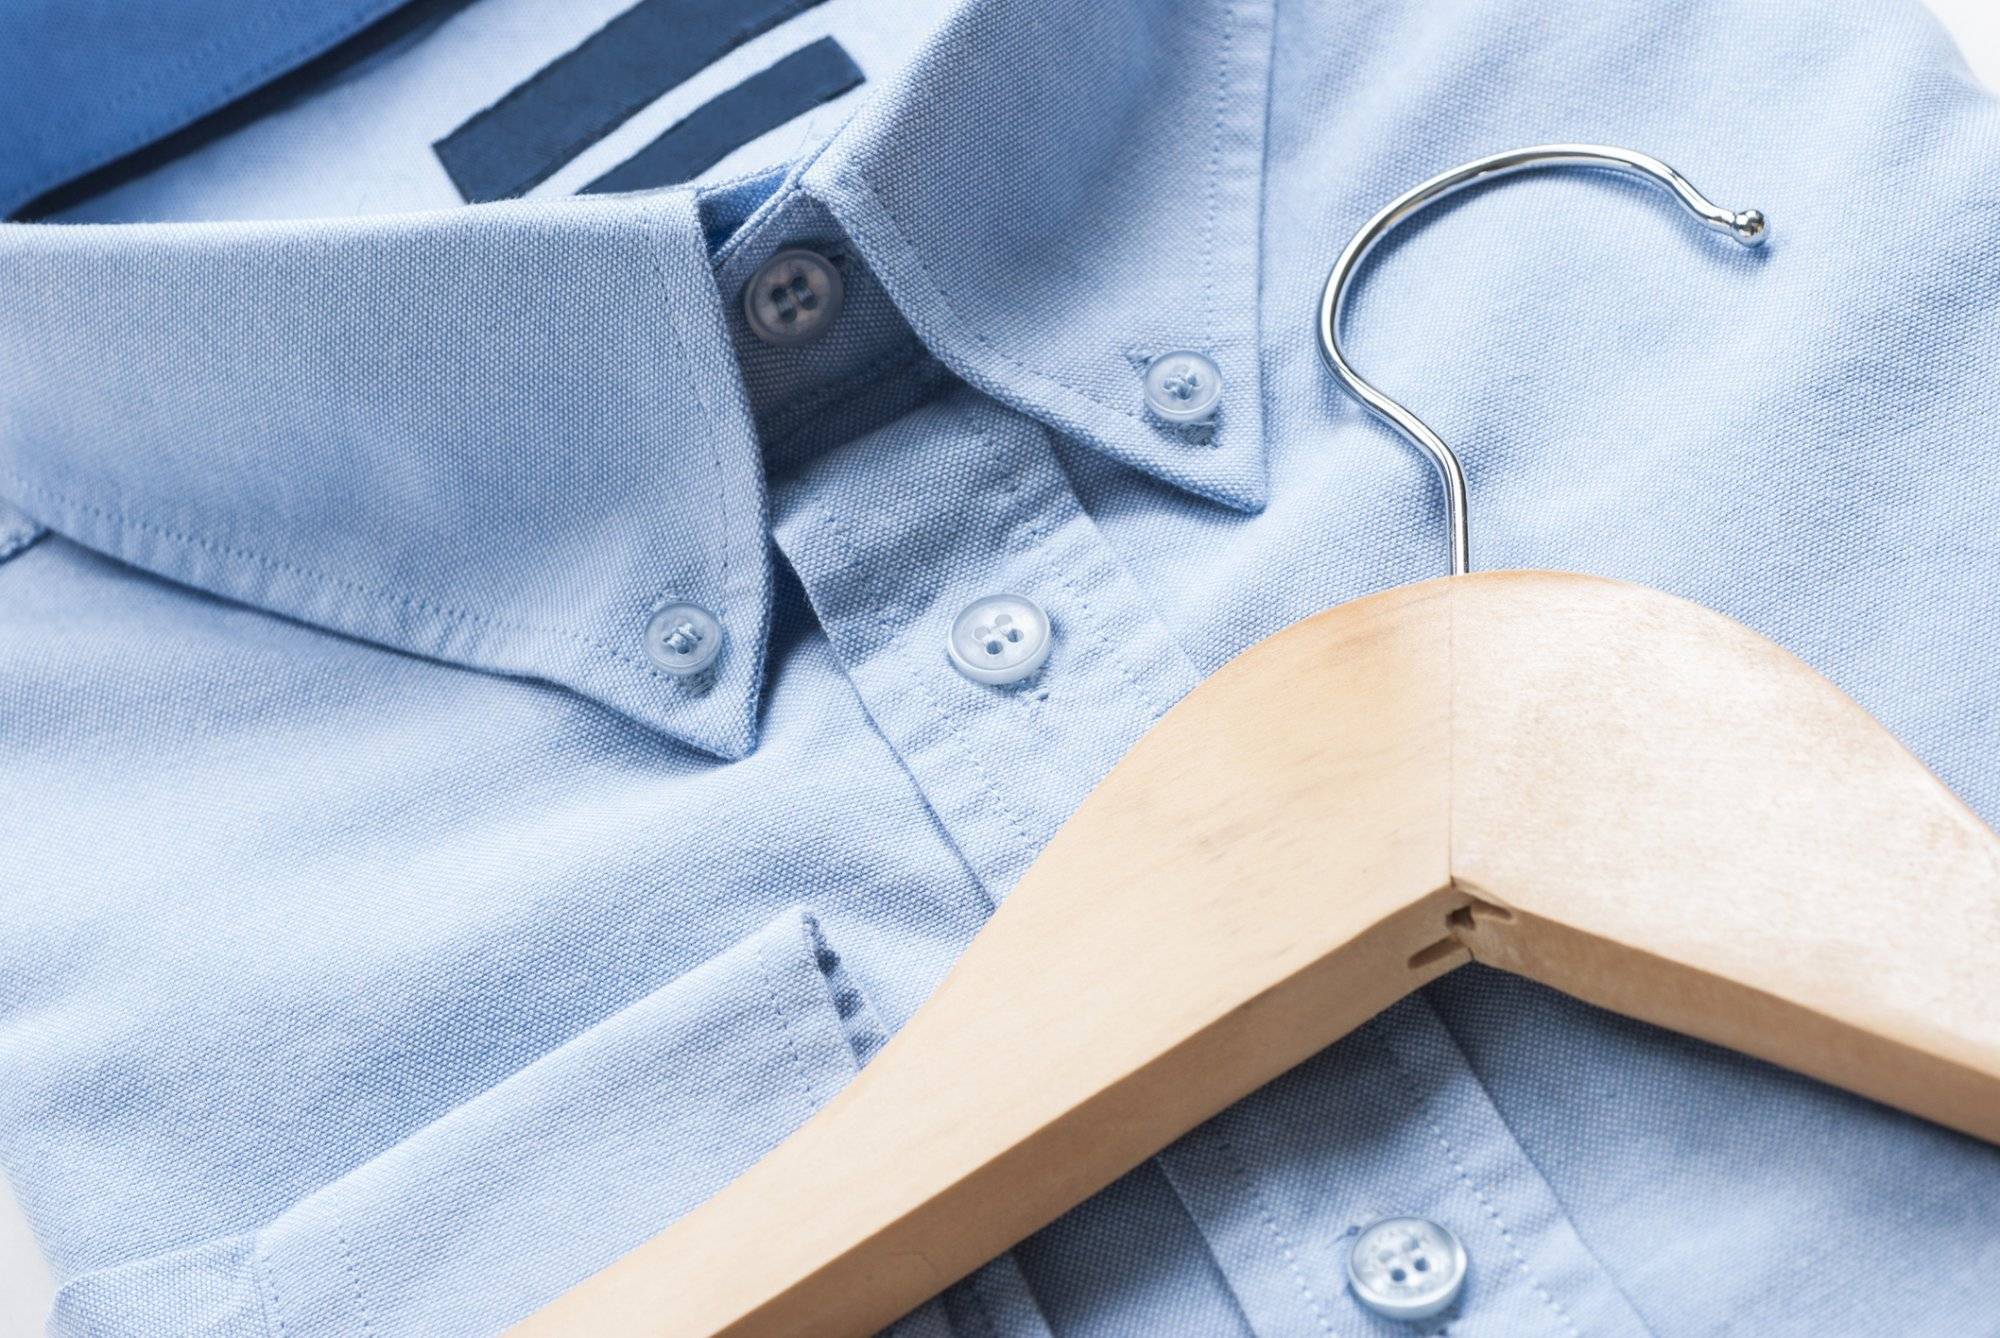 Wooden cloth hanger on top of blue shirt